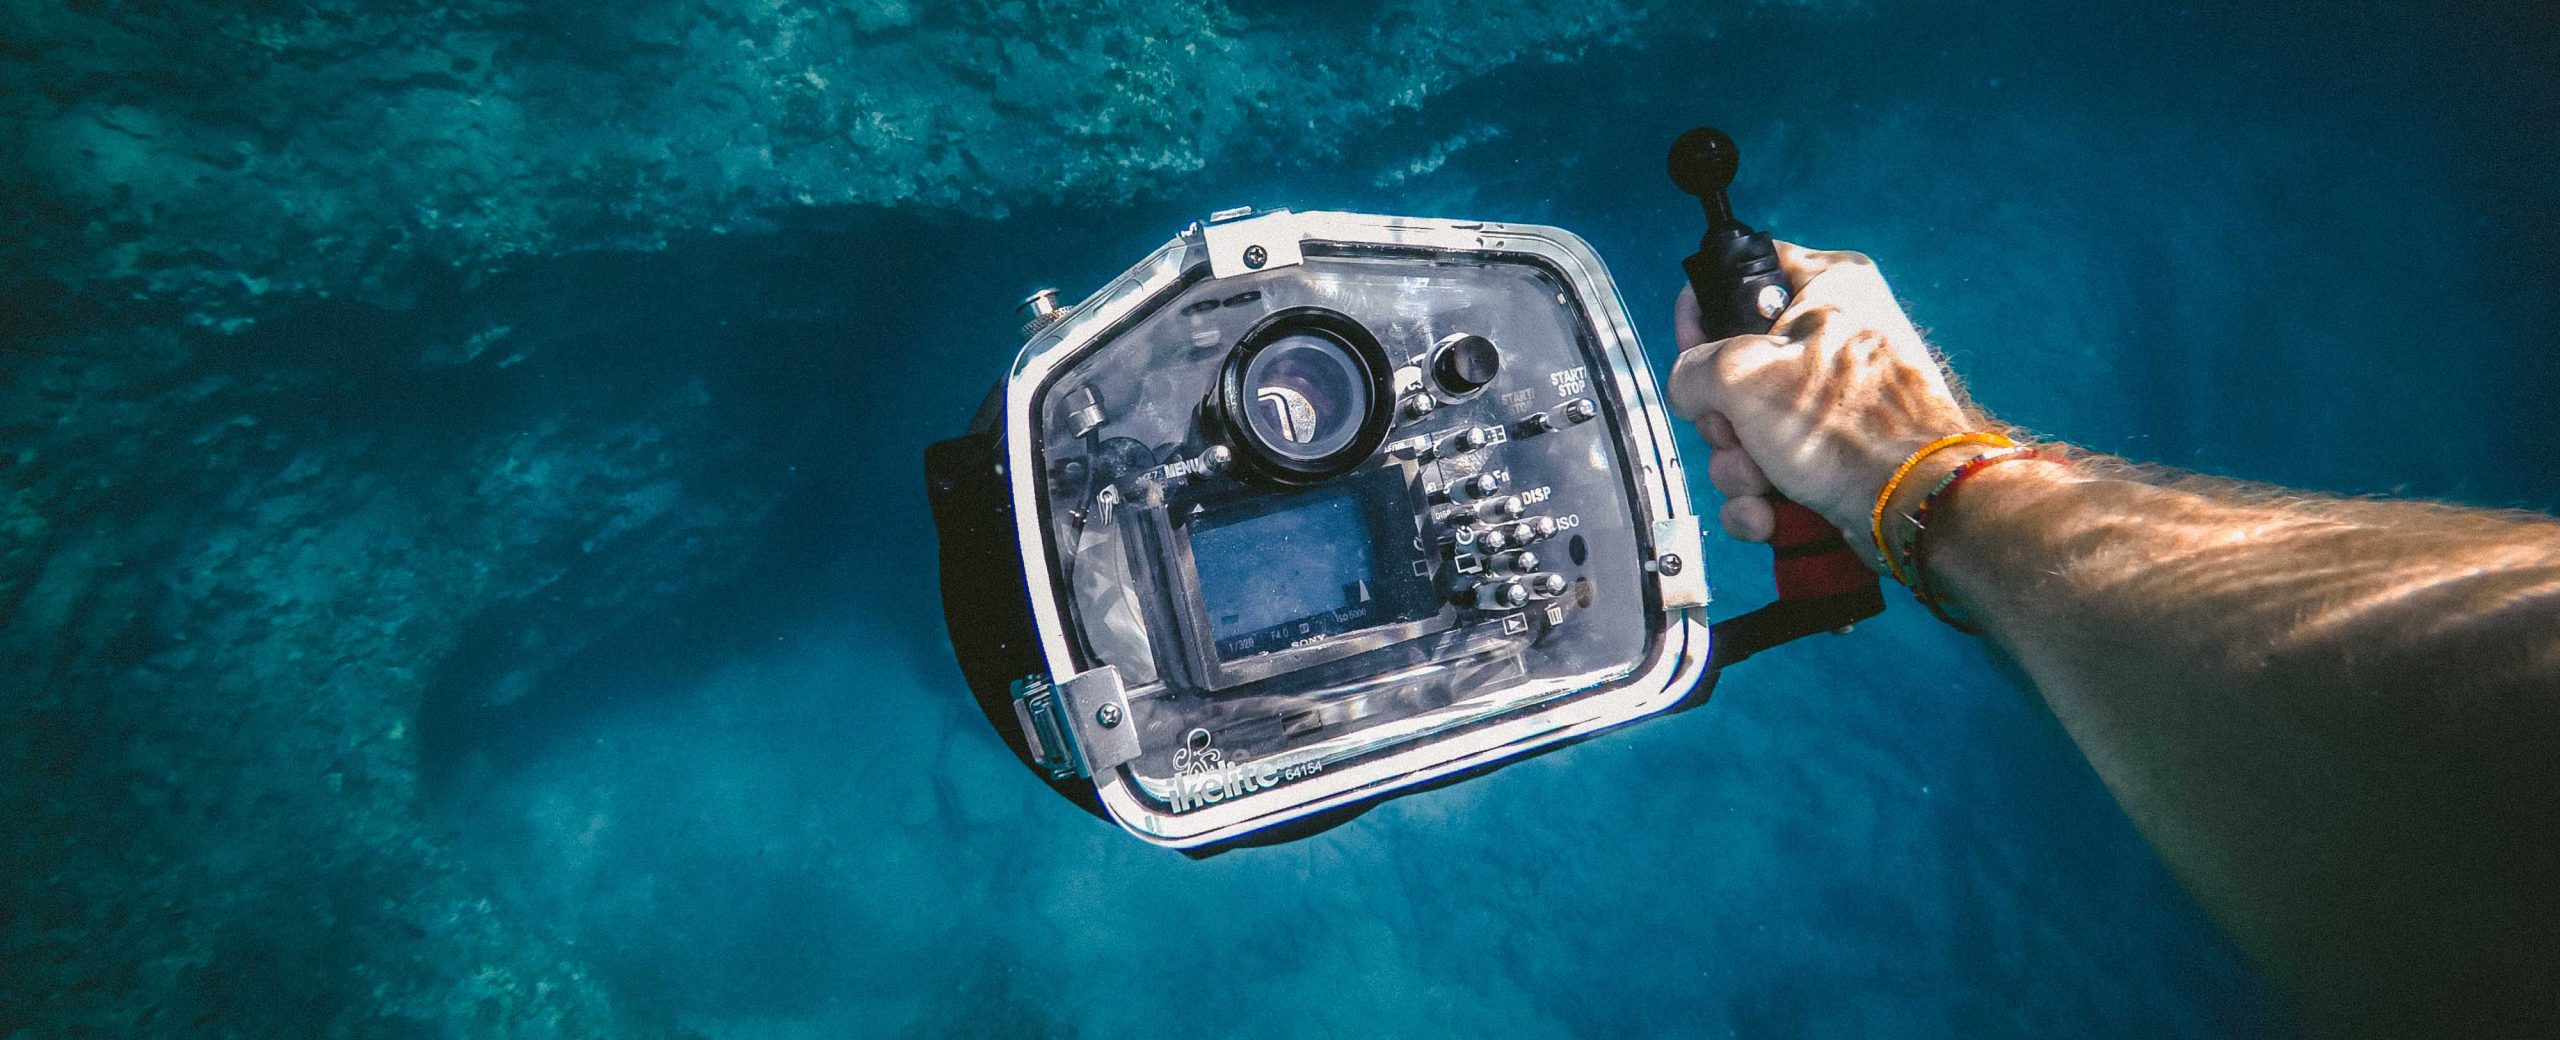 Podvodni fotoaparat